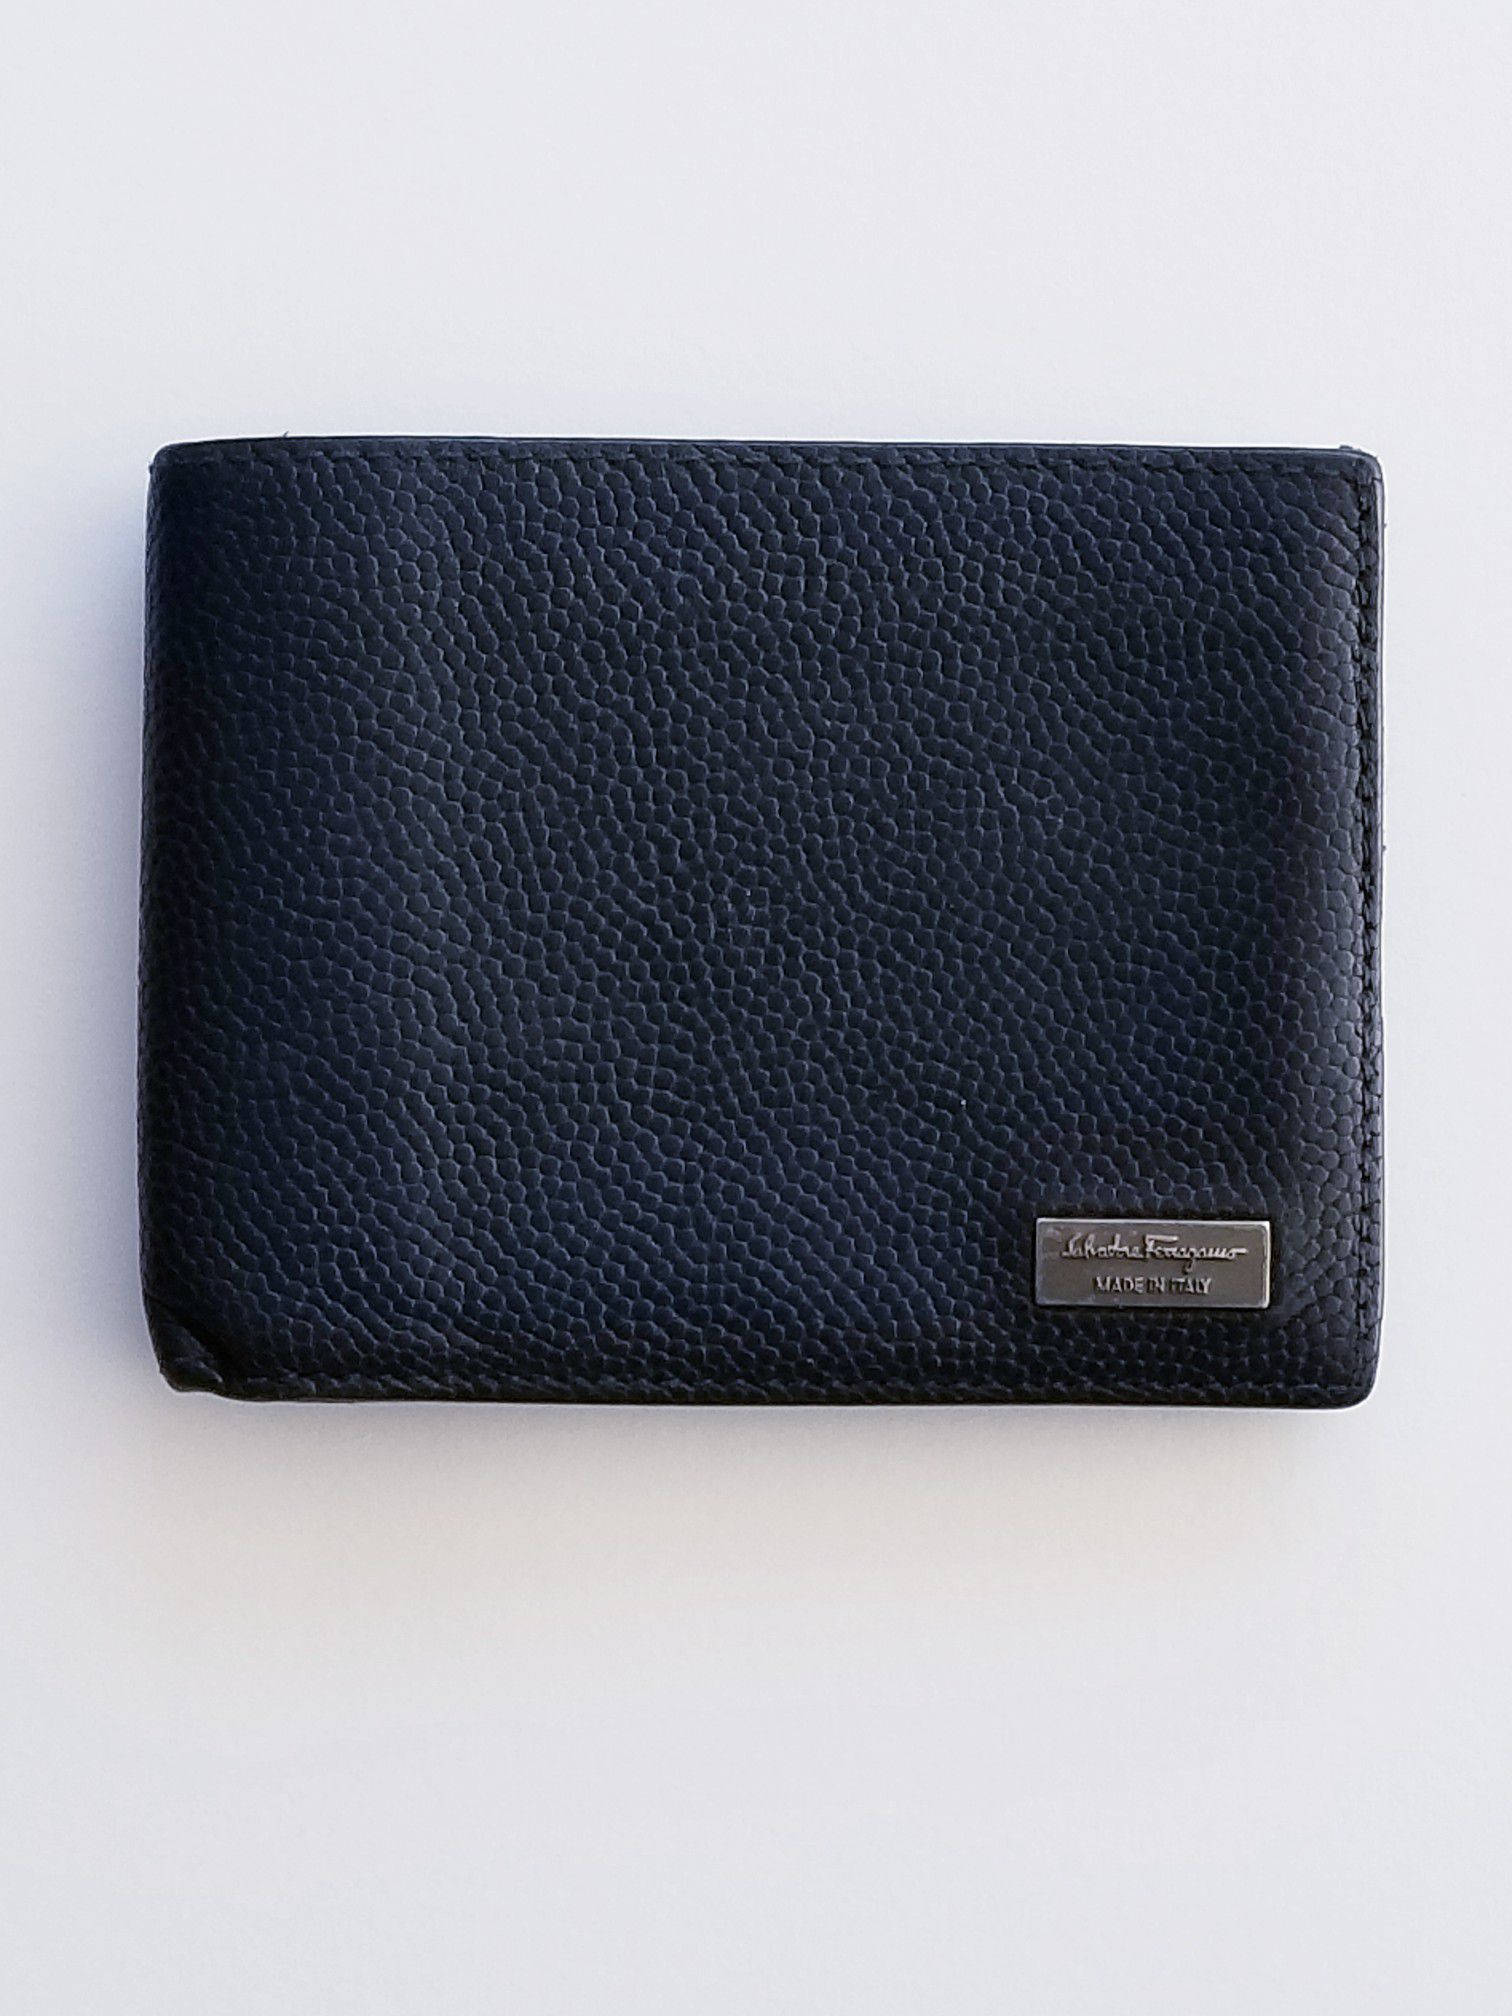 Salvatore Ferragamo Mens Blue Leather Trifold Wallet